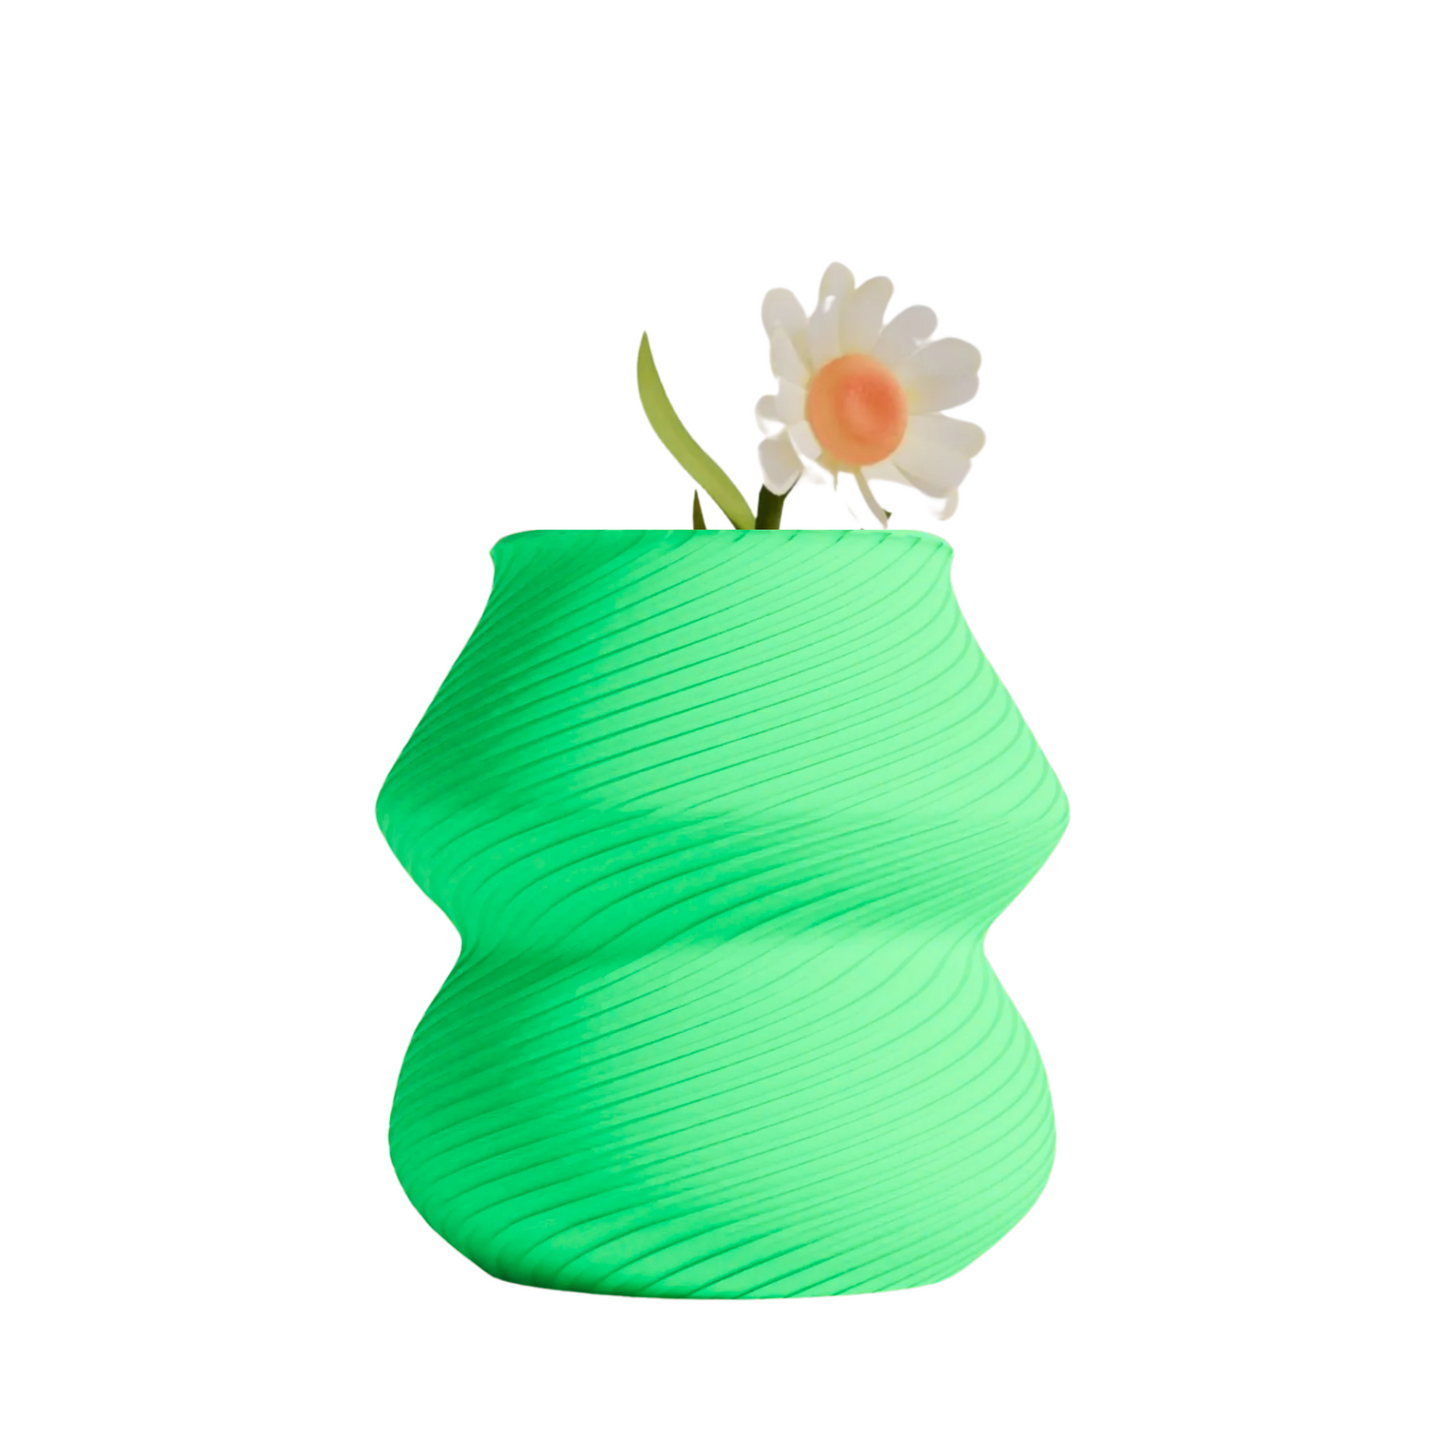 Modena design vase green edition